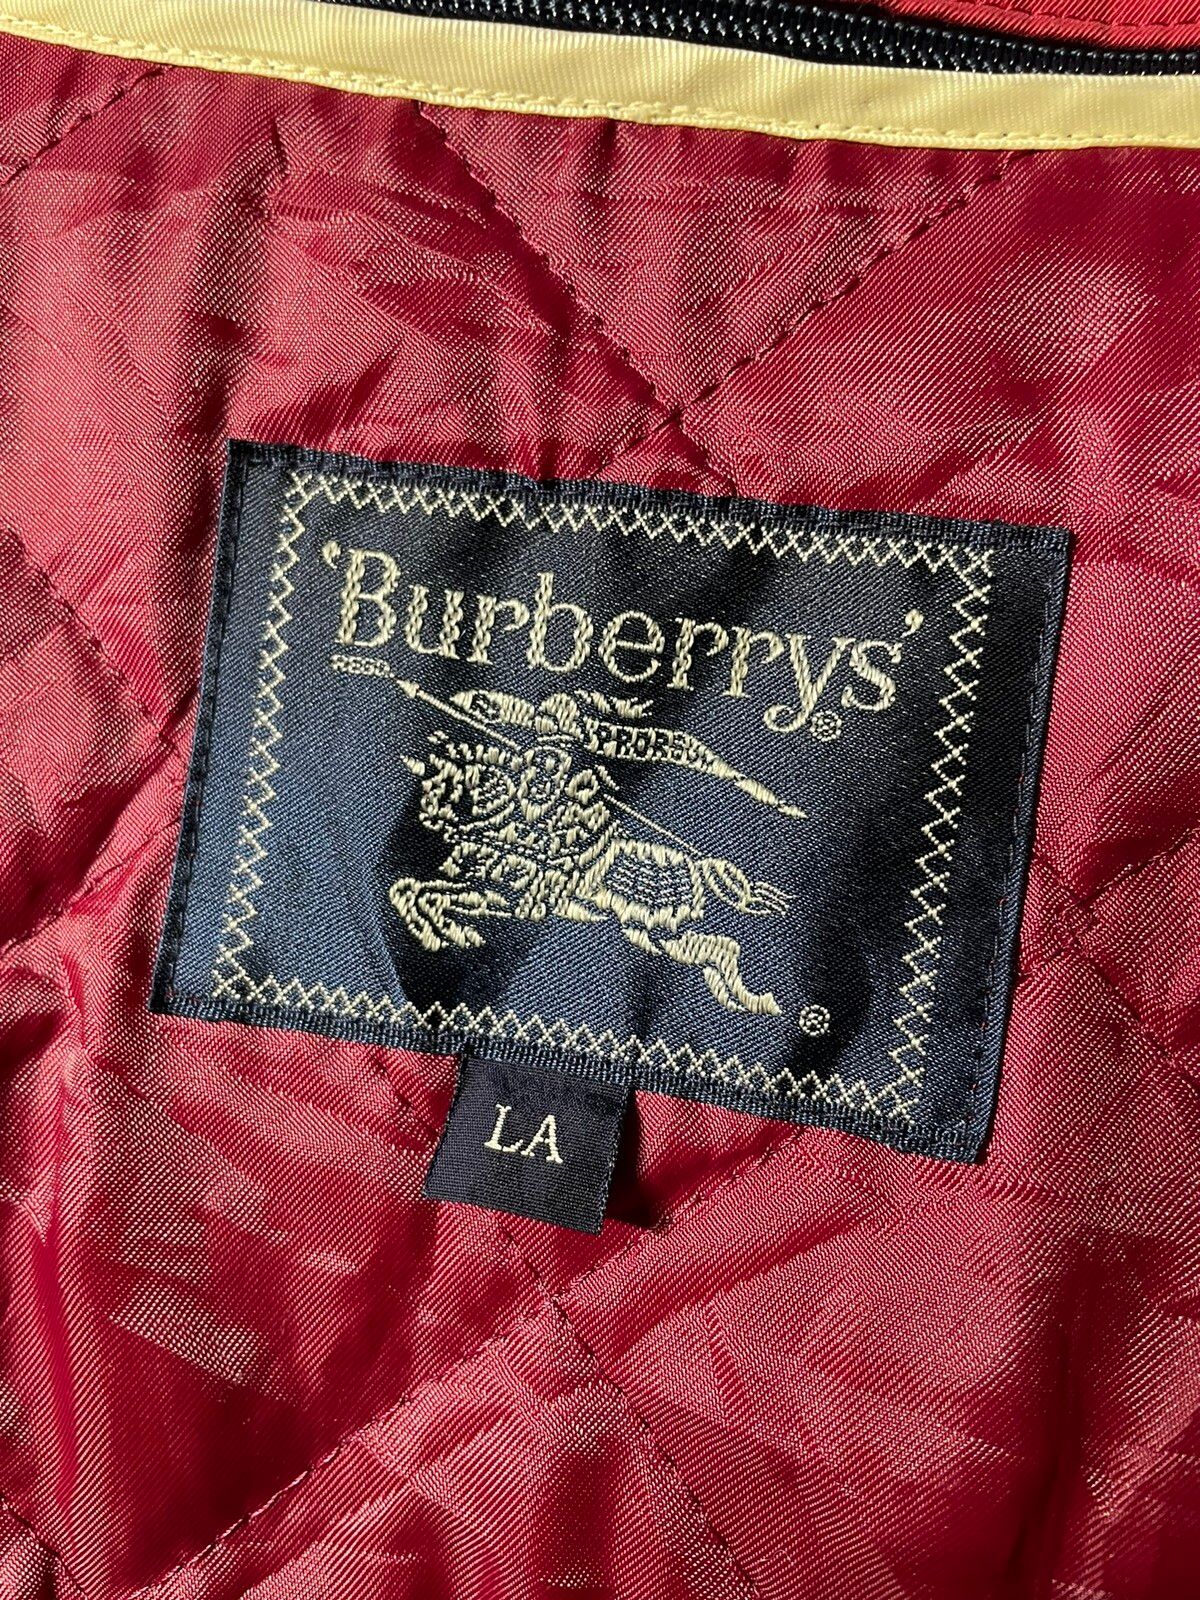 DELETE IN 24h‼️ Burberry reversible big logo jacket - 7